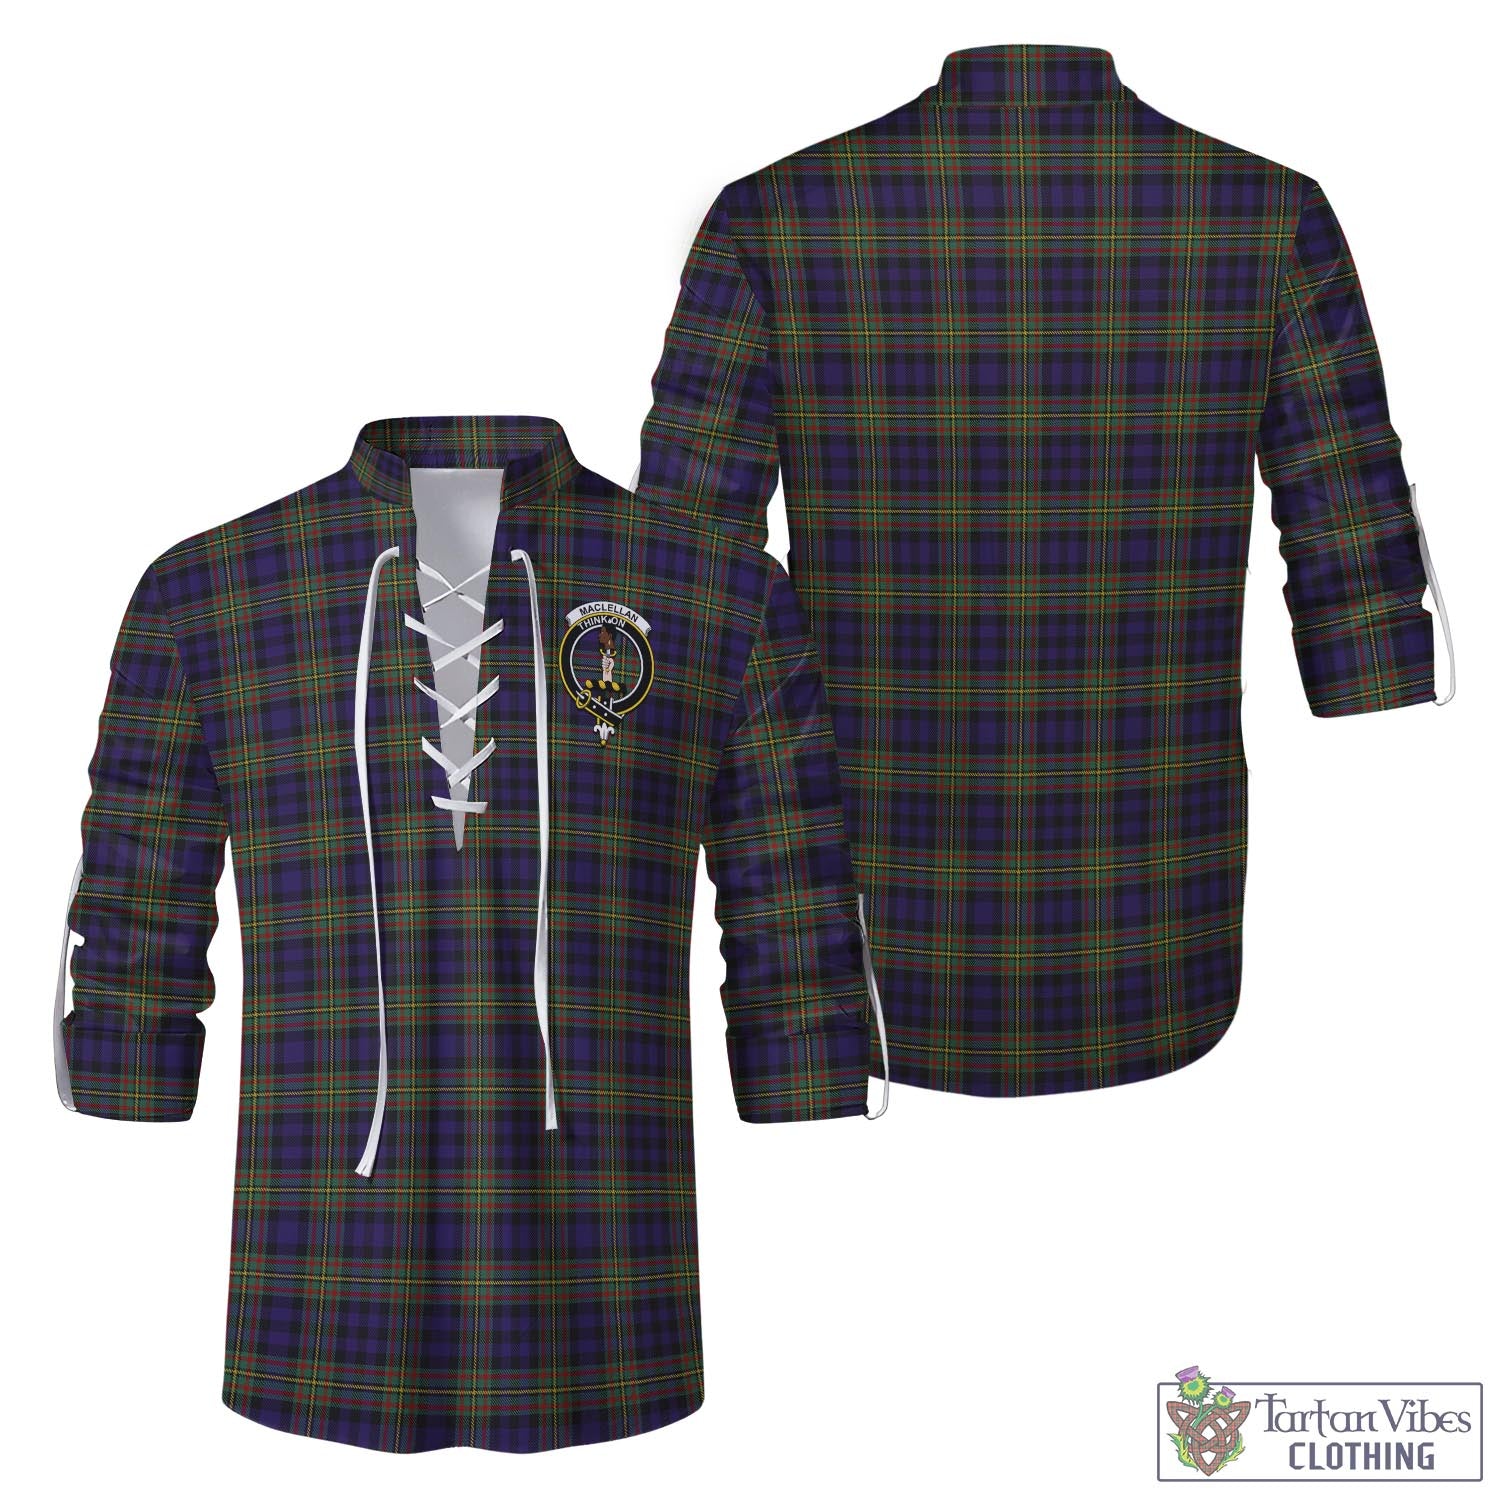 Tartan Vibes Clothing MacLellan Tartan Men's Scottish Traditional Jacobite Ghillie Kilt Shirt with Family Crest